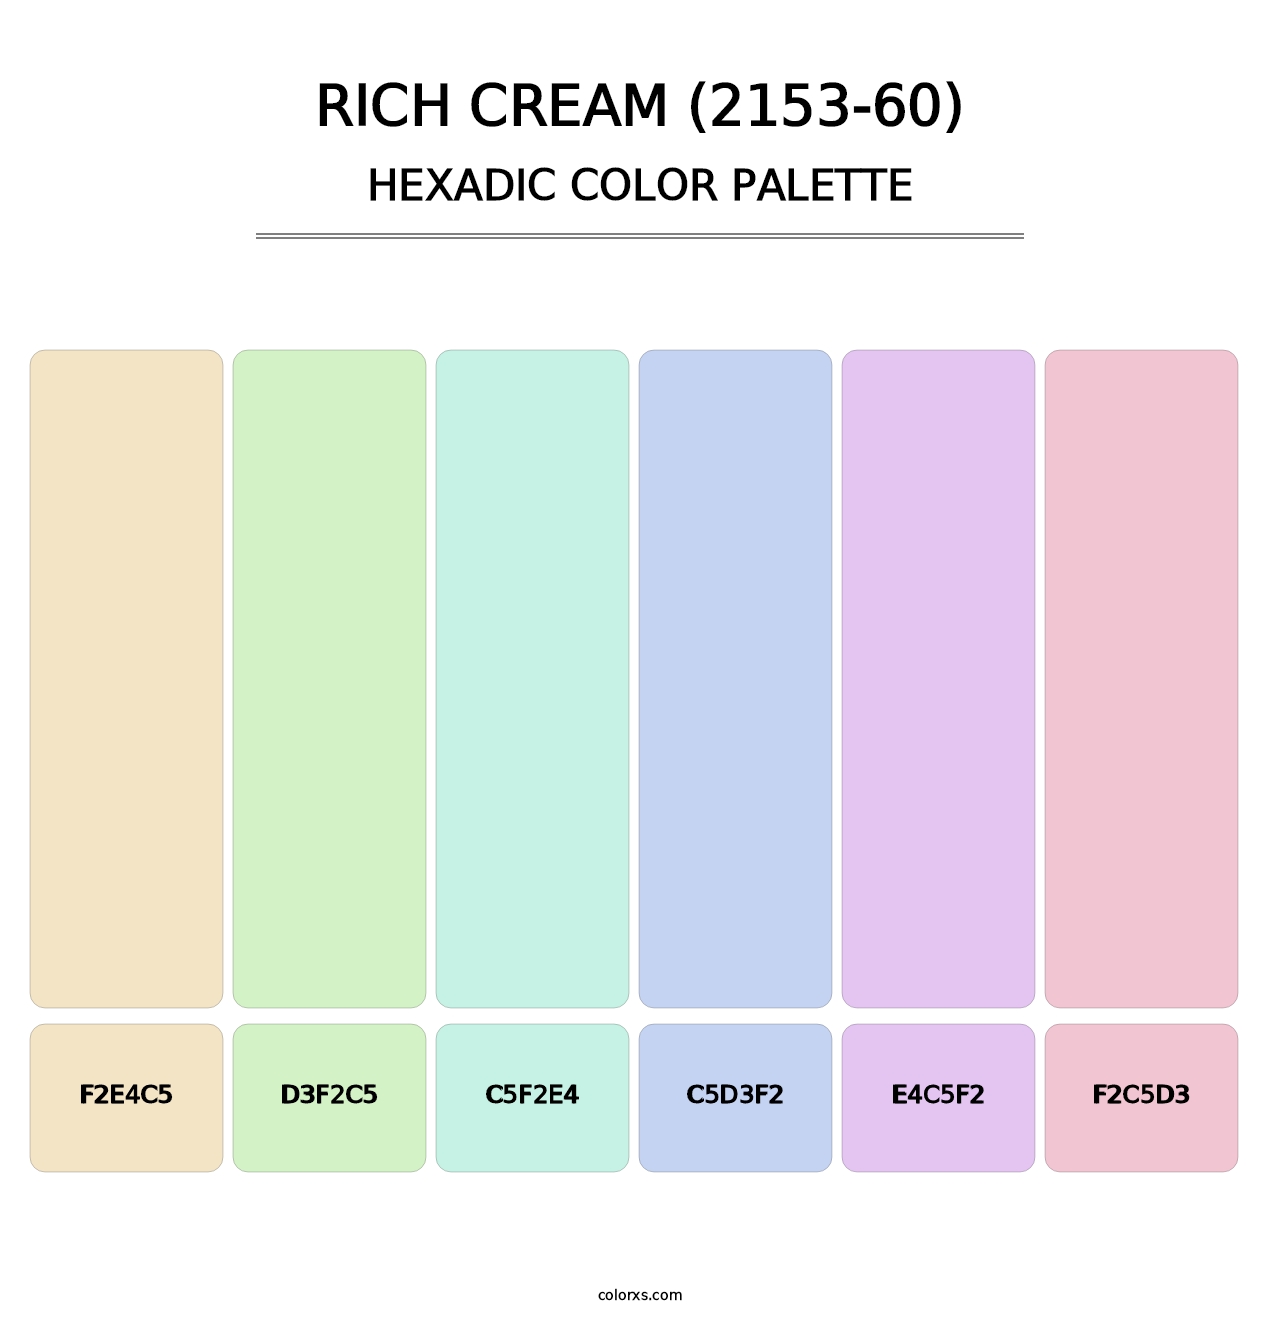 Rich Cream (2153-60) - Hexadic Color Palette